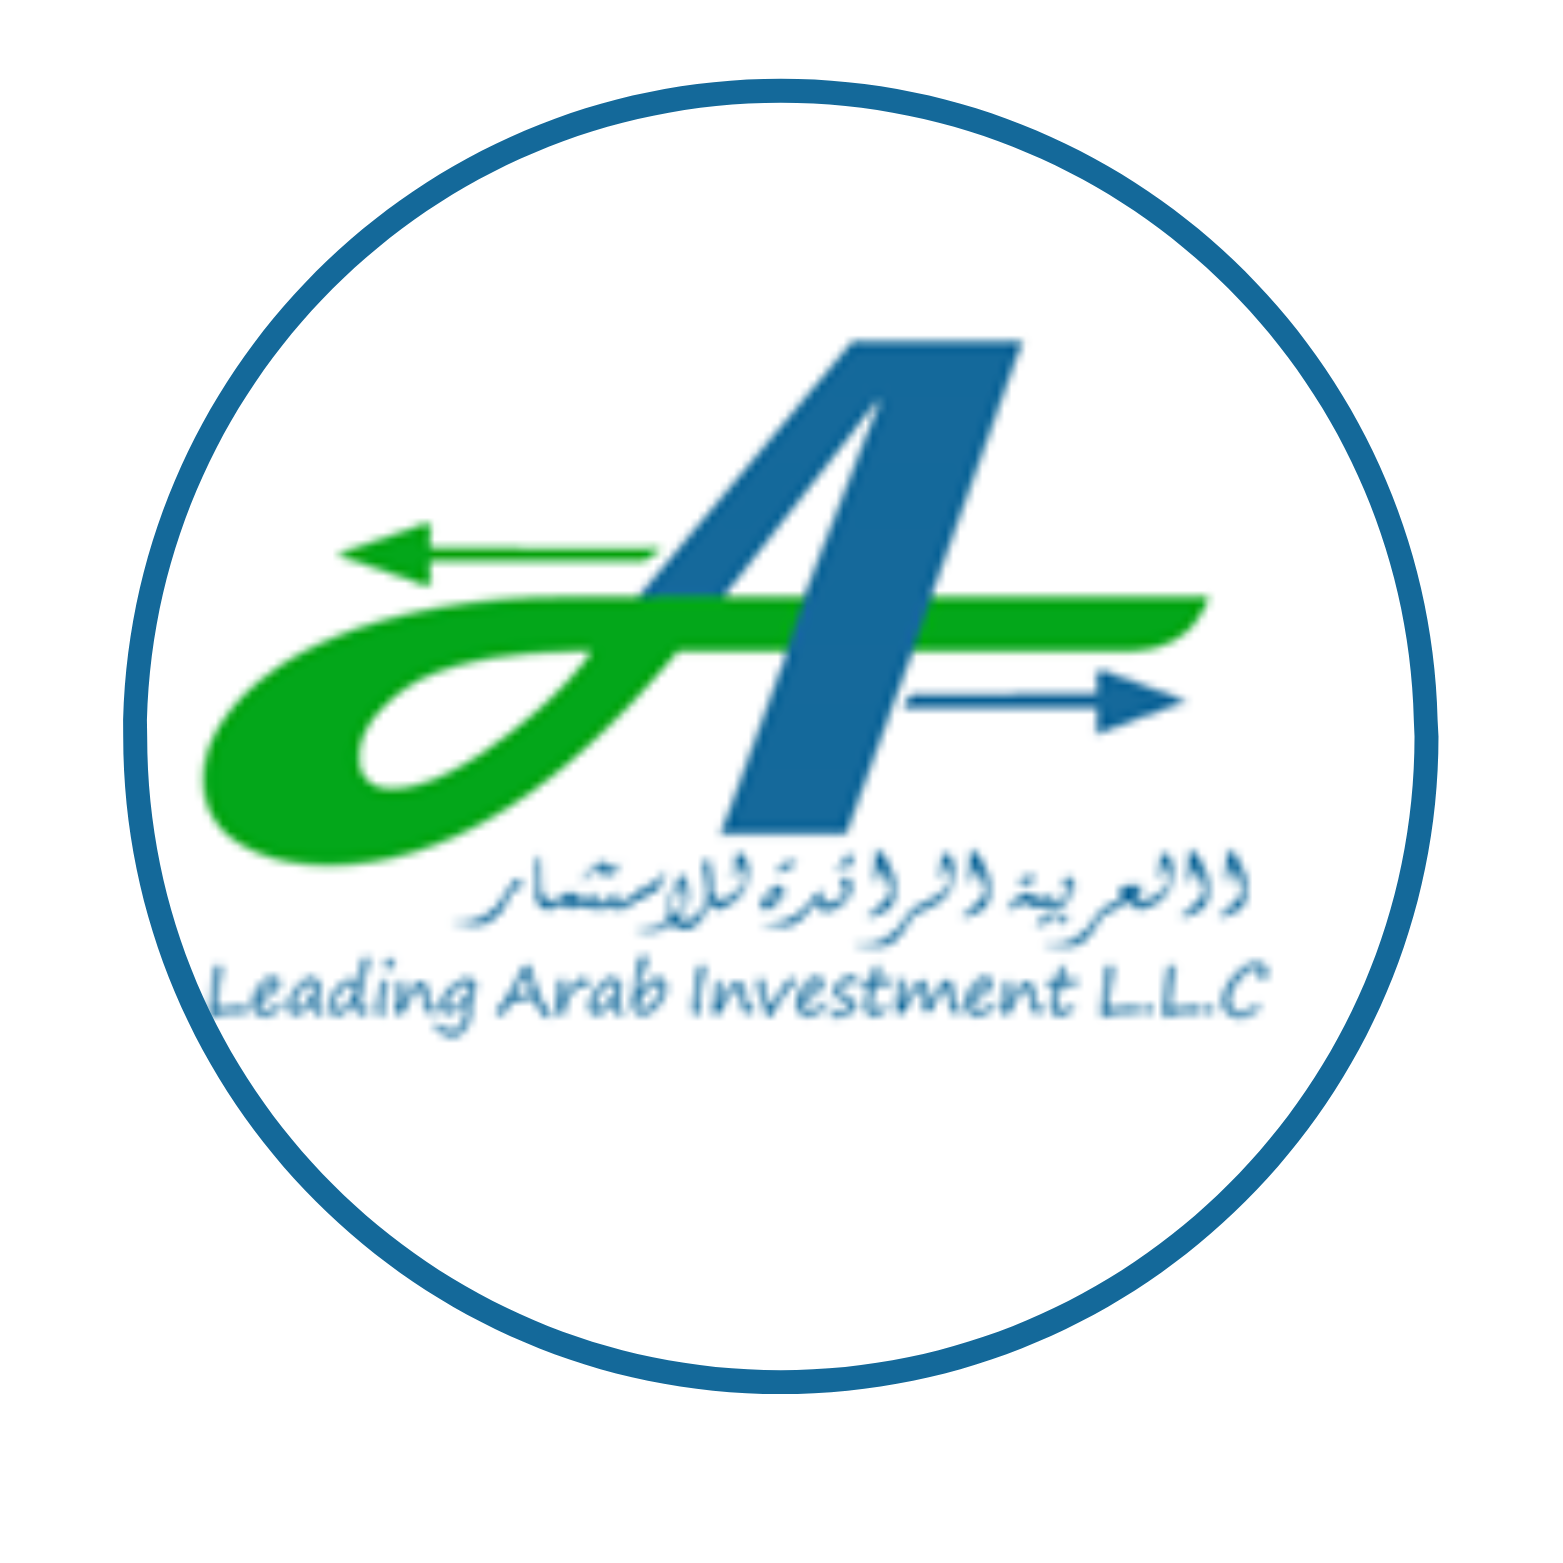 Leading Arab Investments LLC